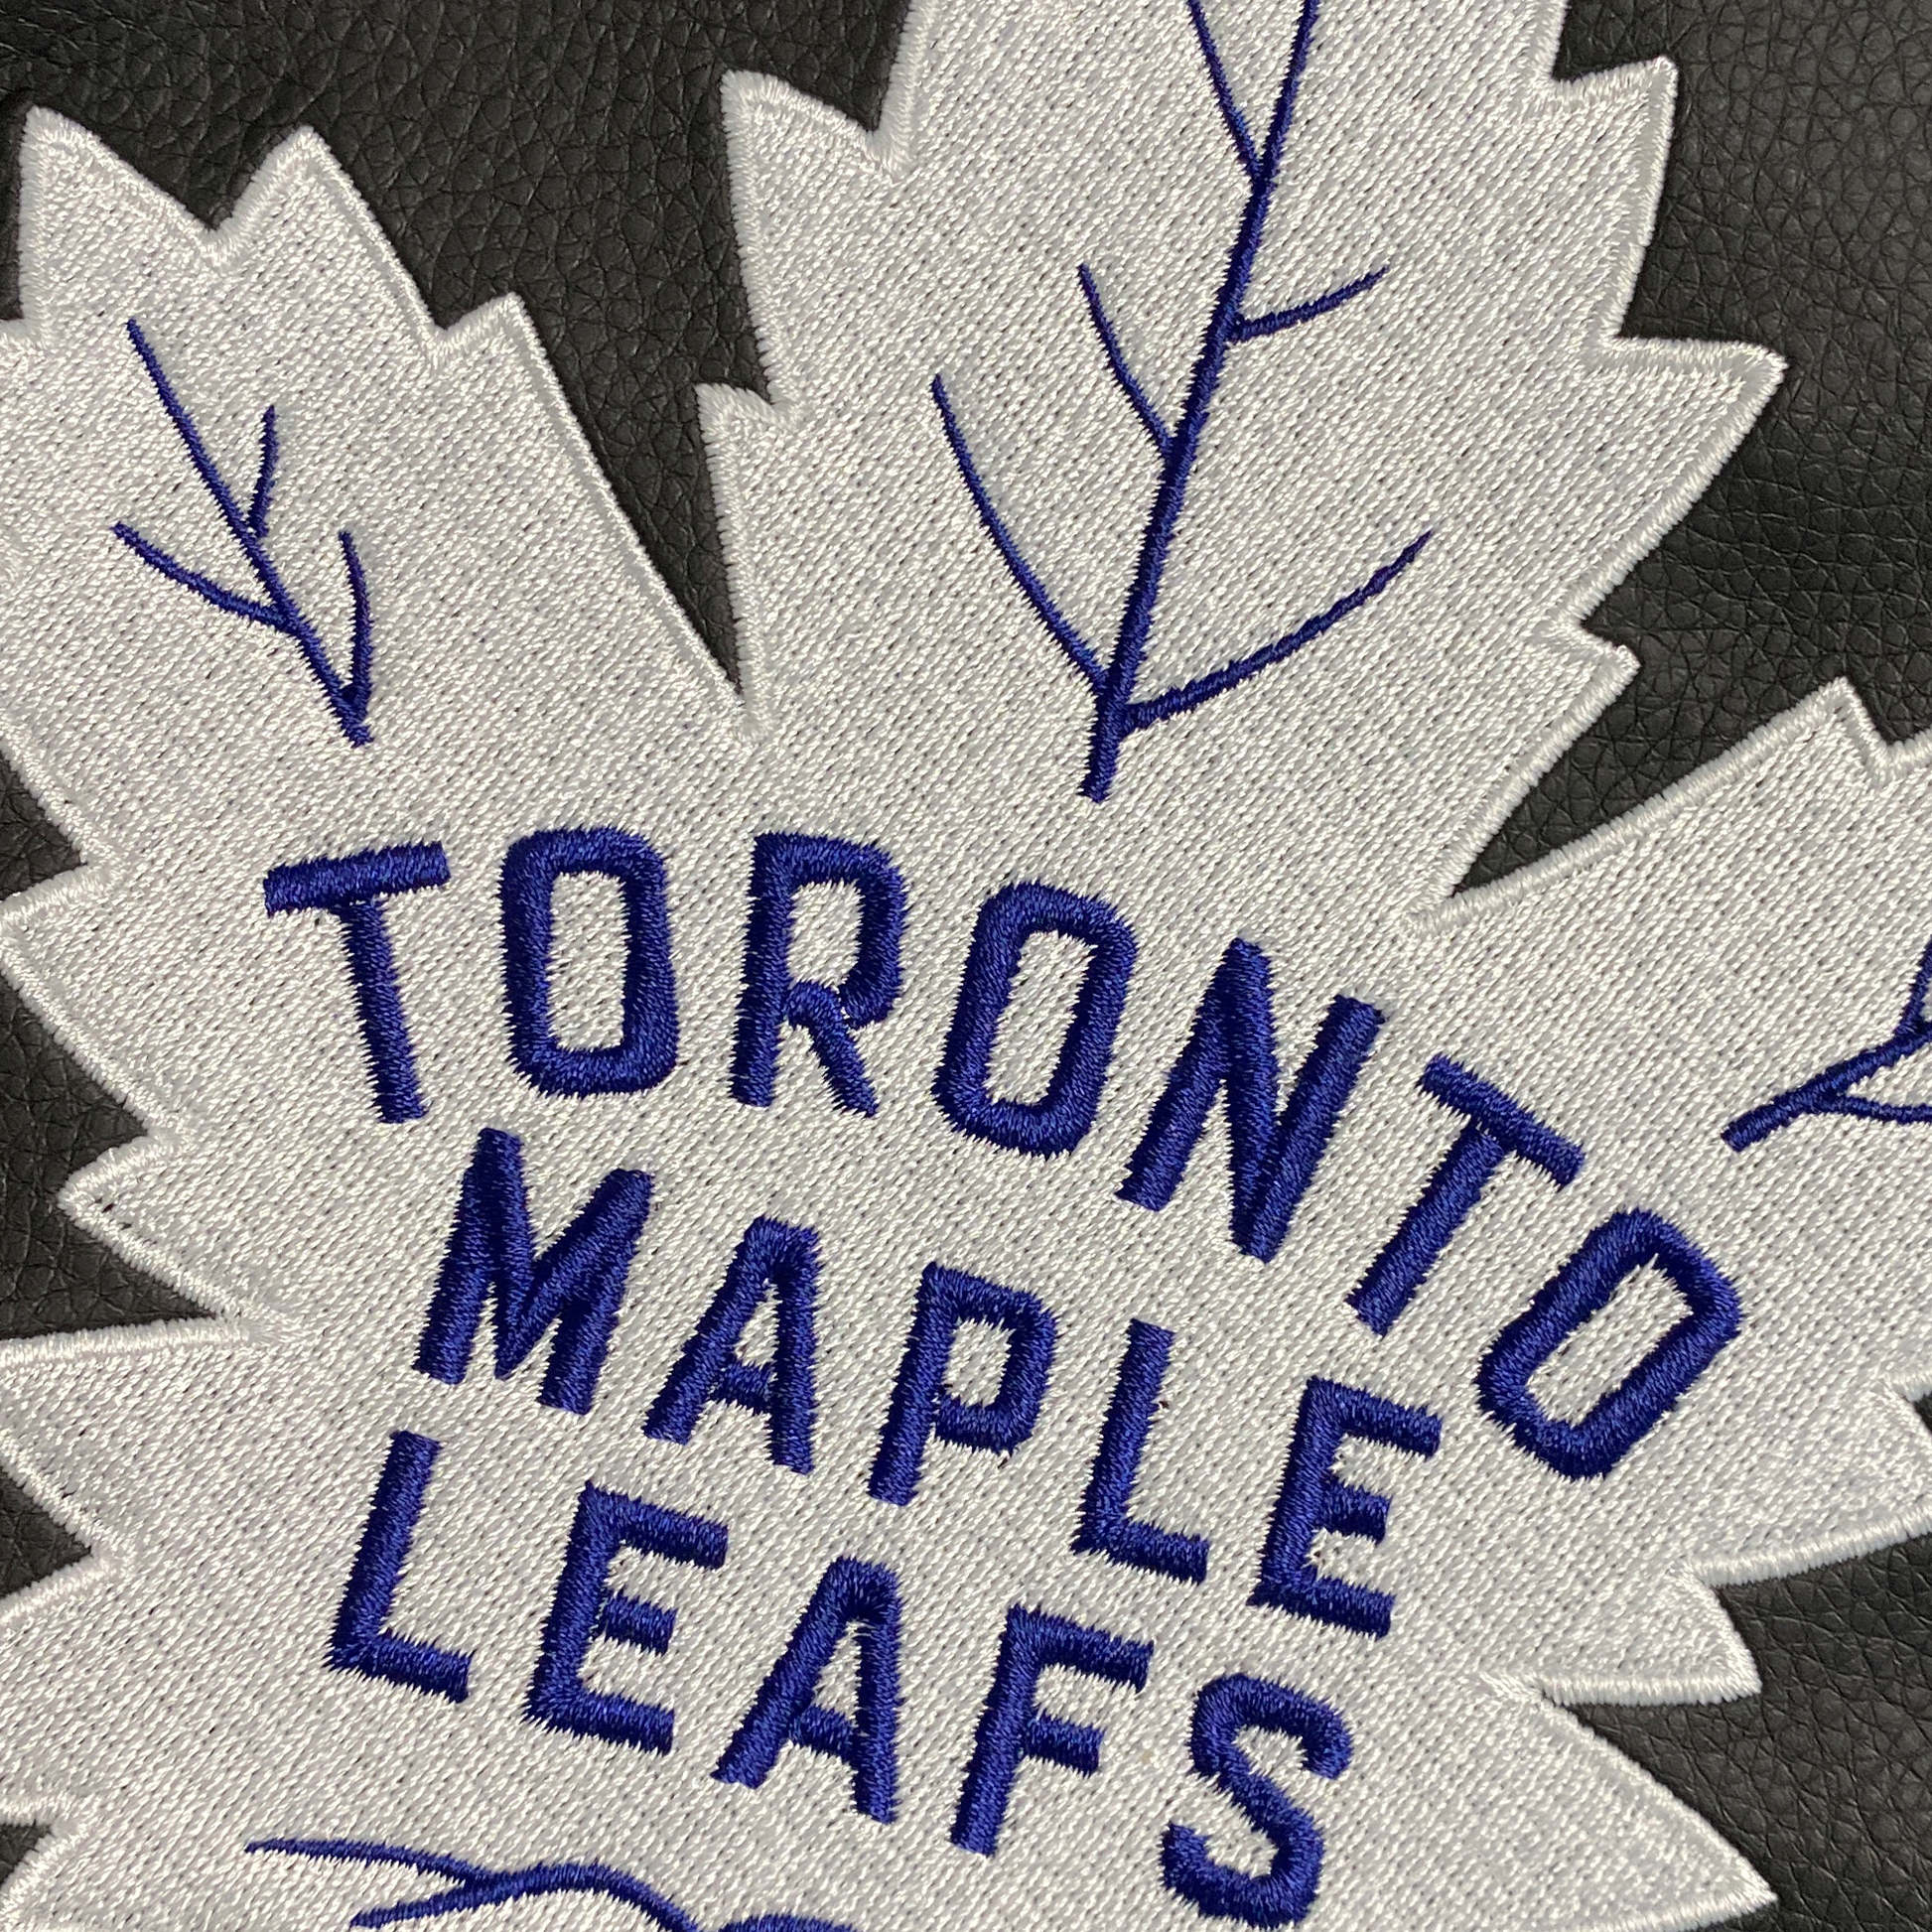 NHL Toronto Maple Leafs Chrome Emblem